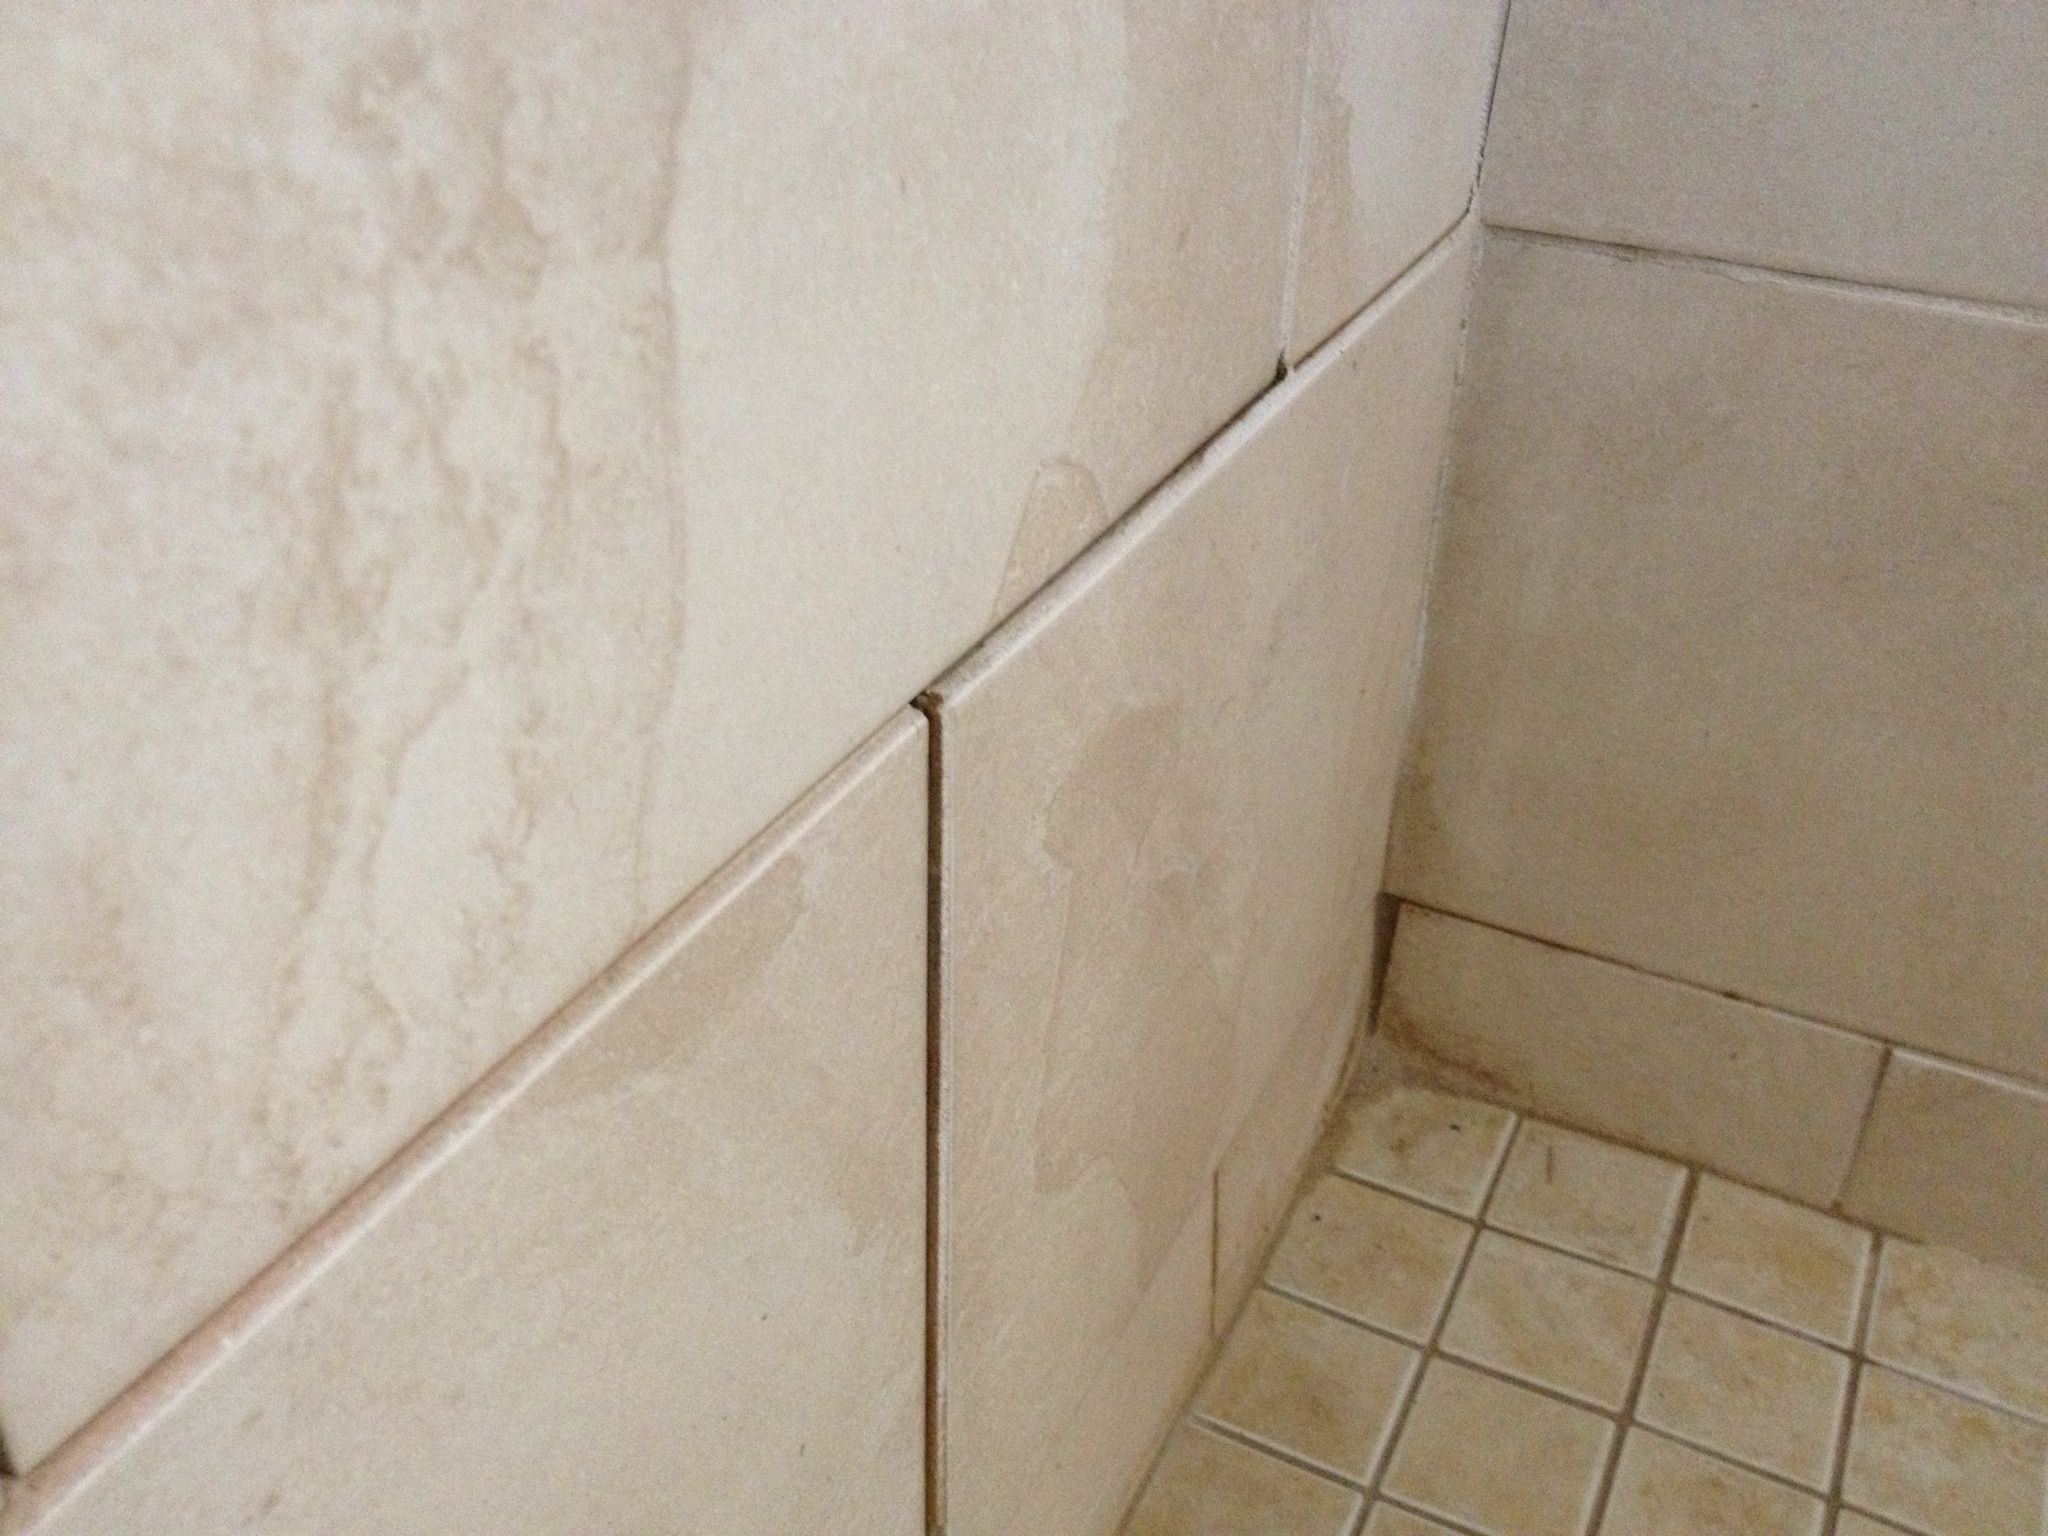 Repairing Bathroom Tiles
 How to Repair a Loose Shower Tile Recipe in 2019